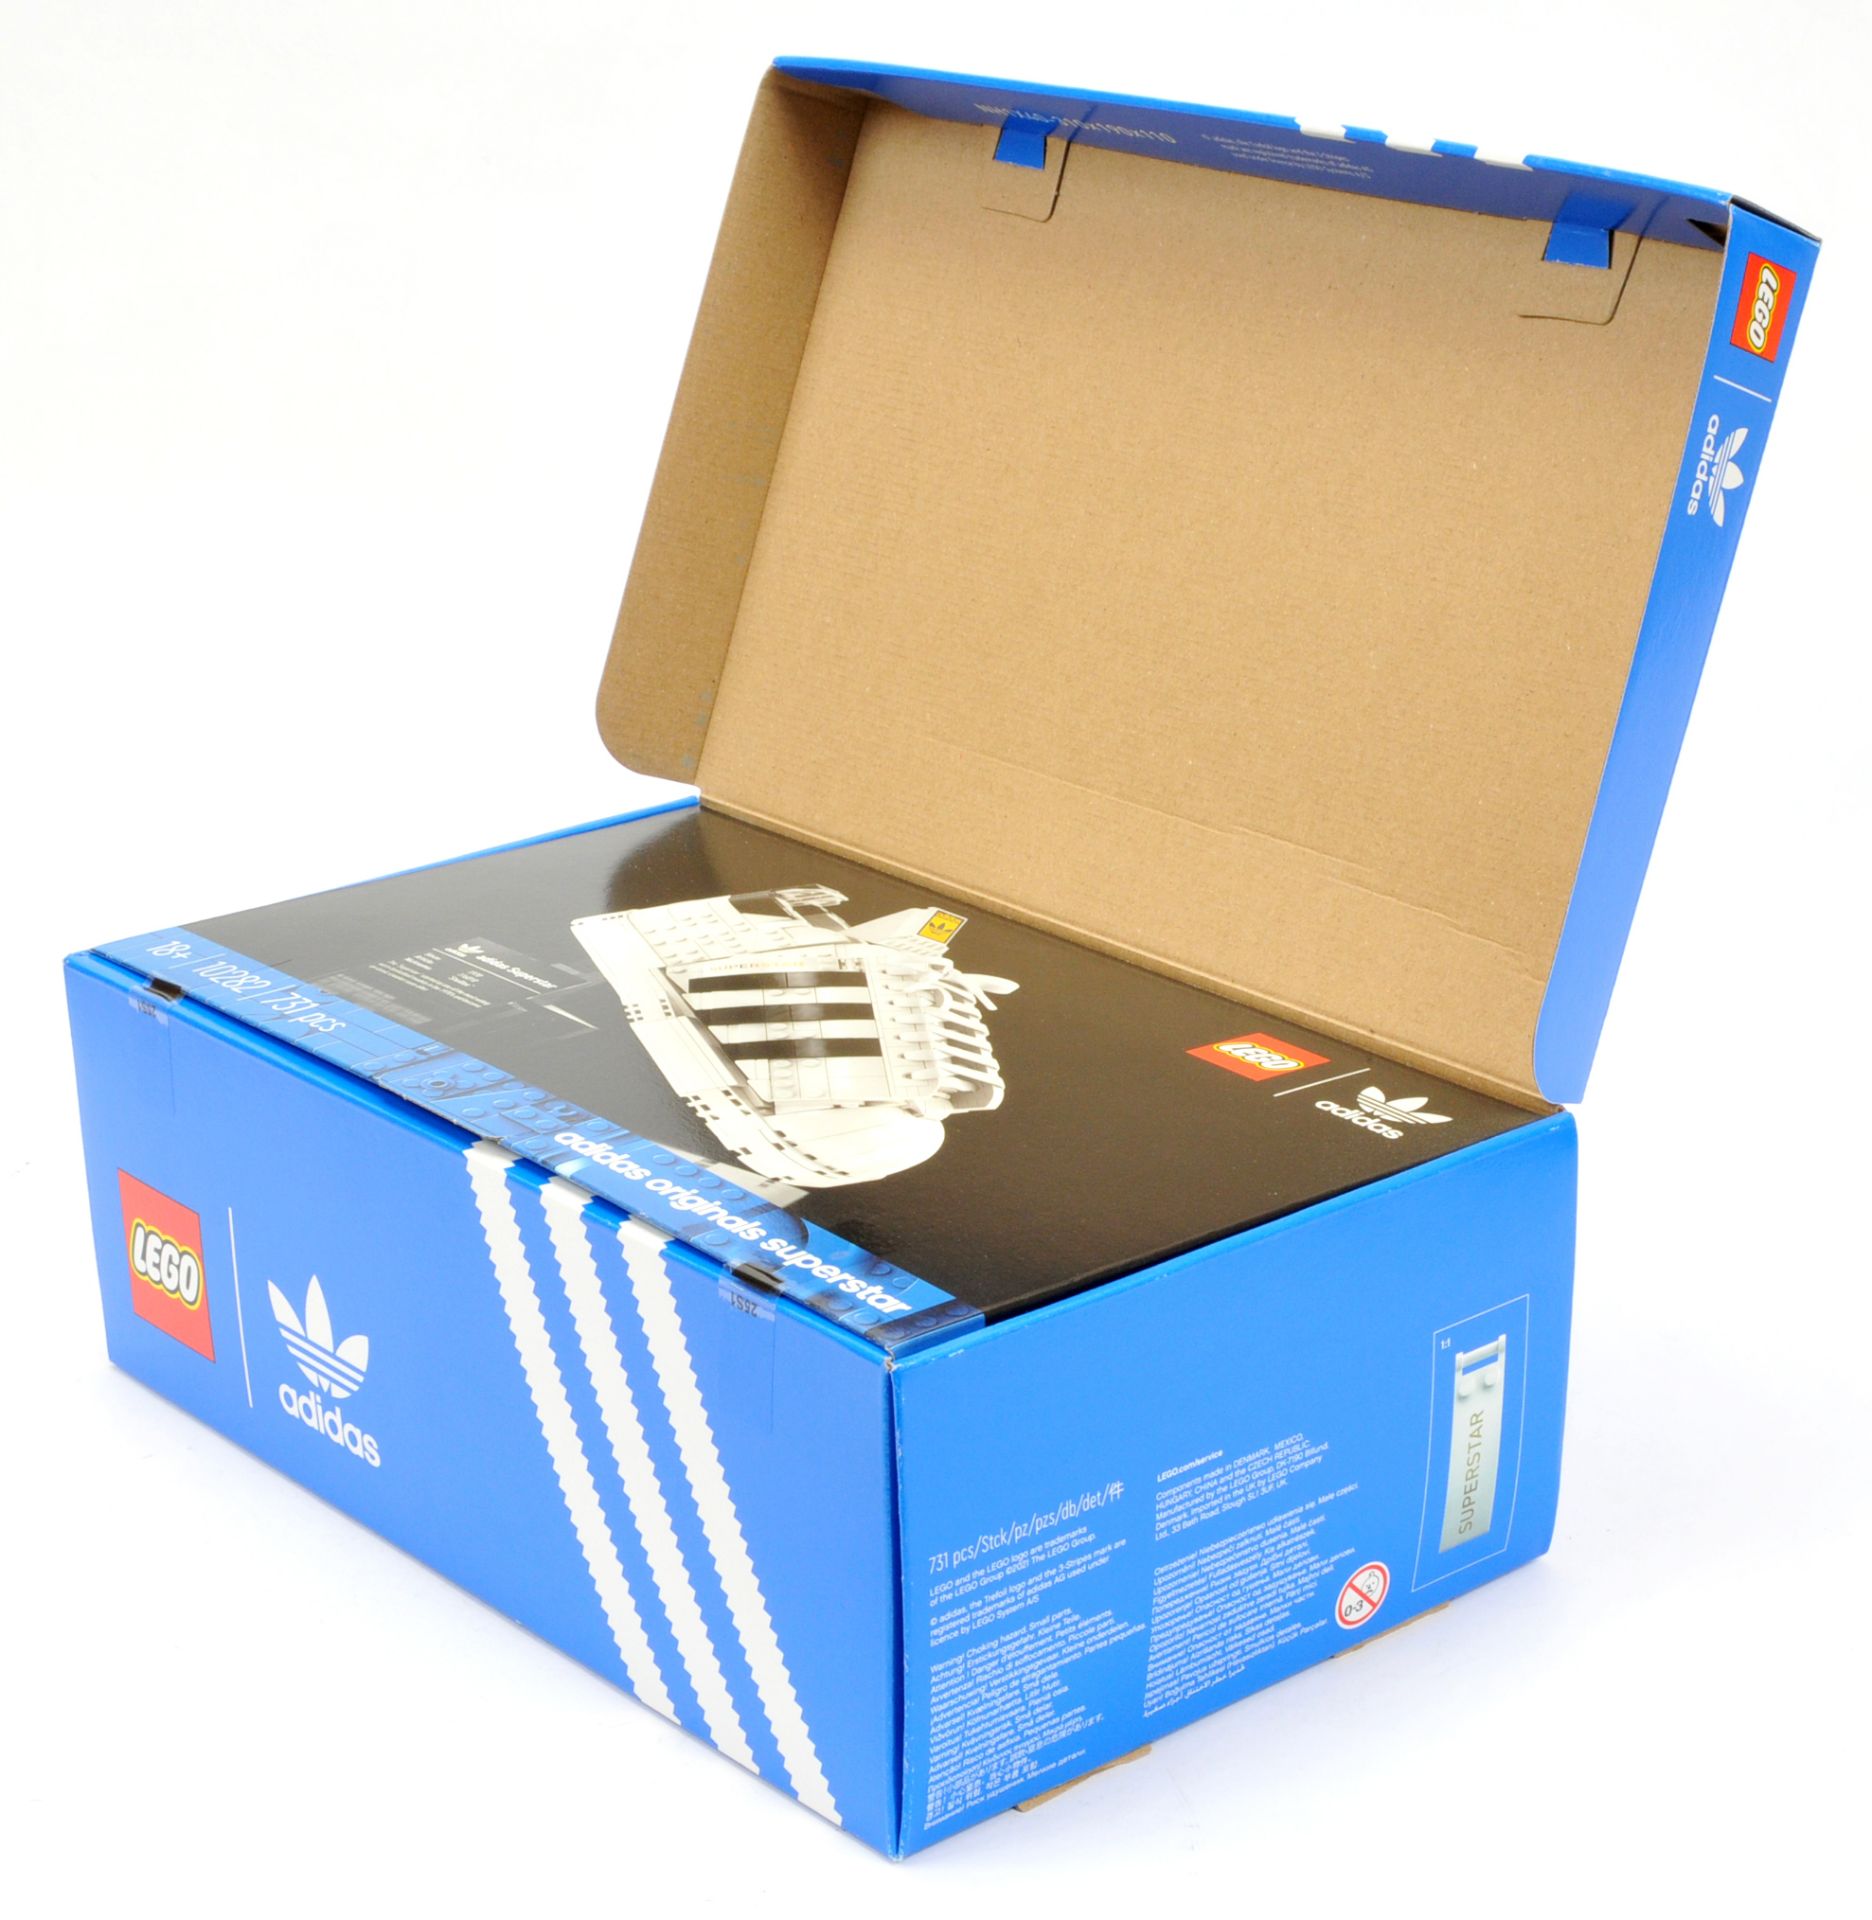 Lego 10282 Adidas Originals Super Star, within Excellent Plus sealed packaging (slight creases an... - Bild 2 aus 3